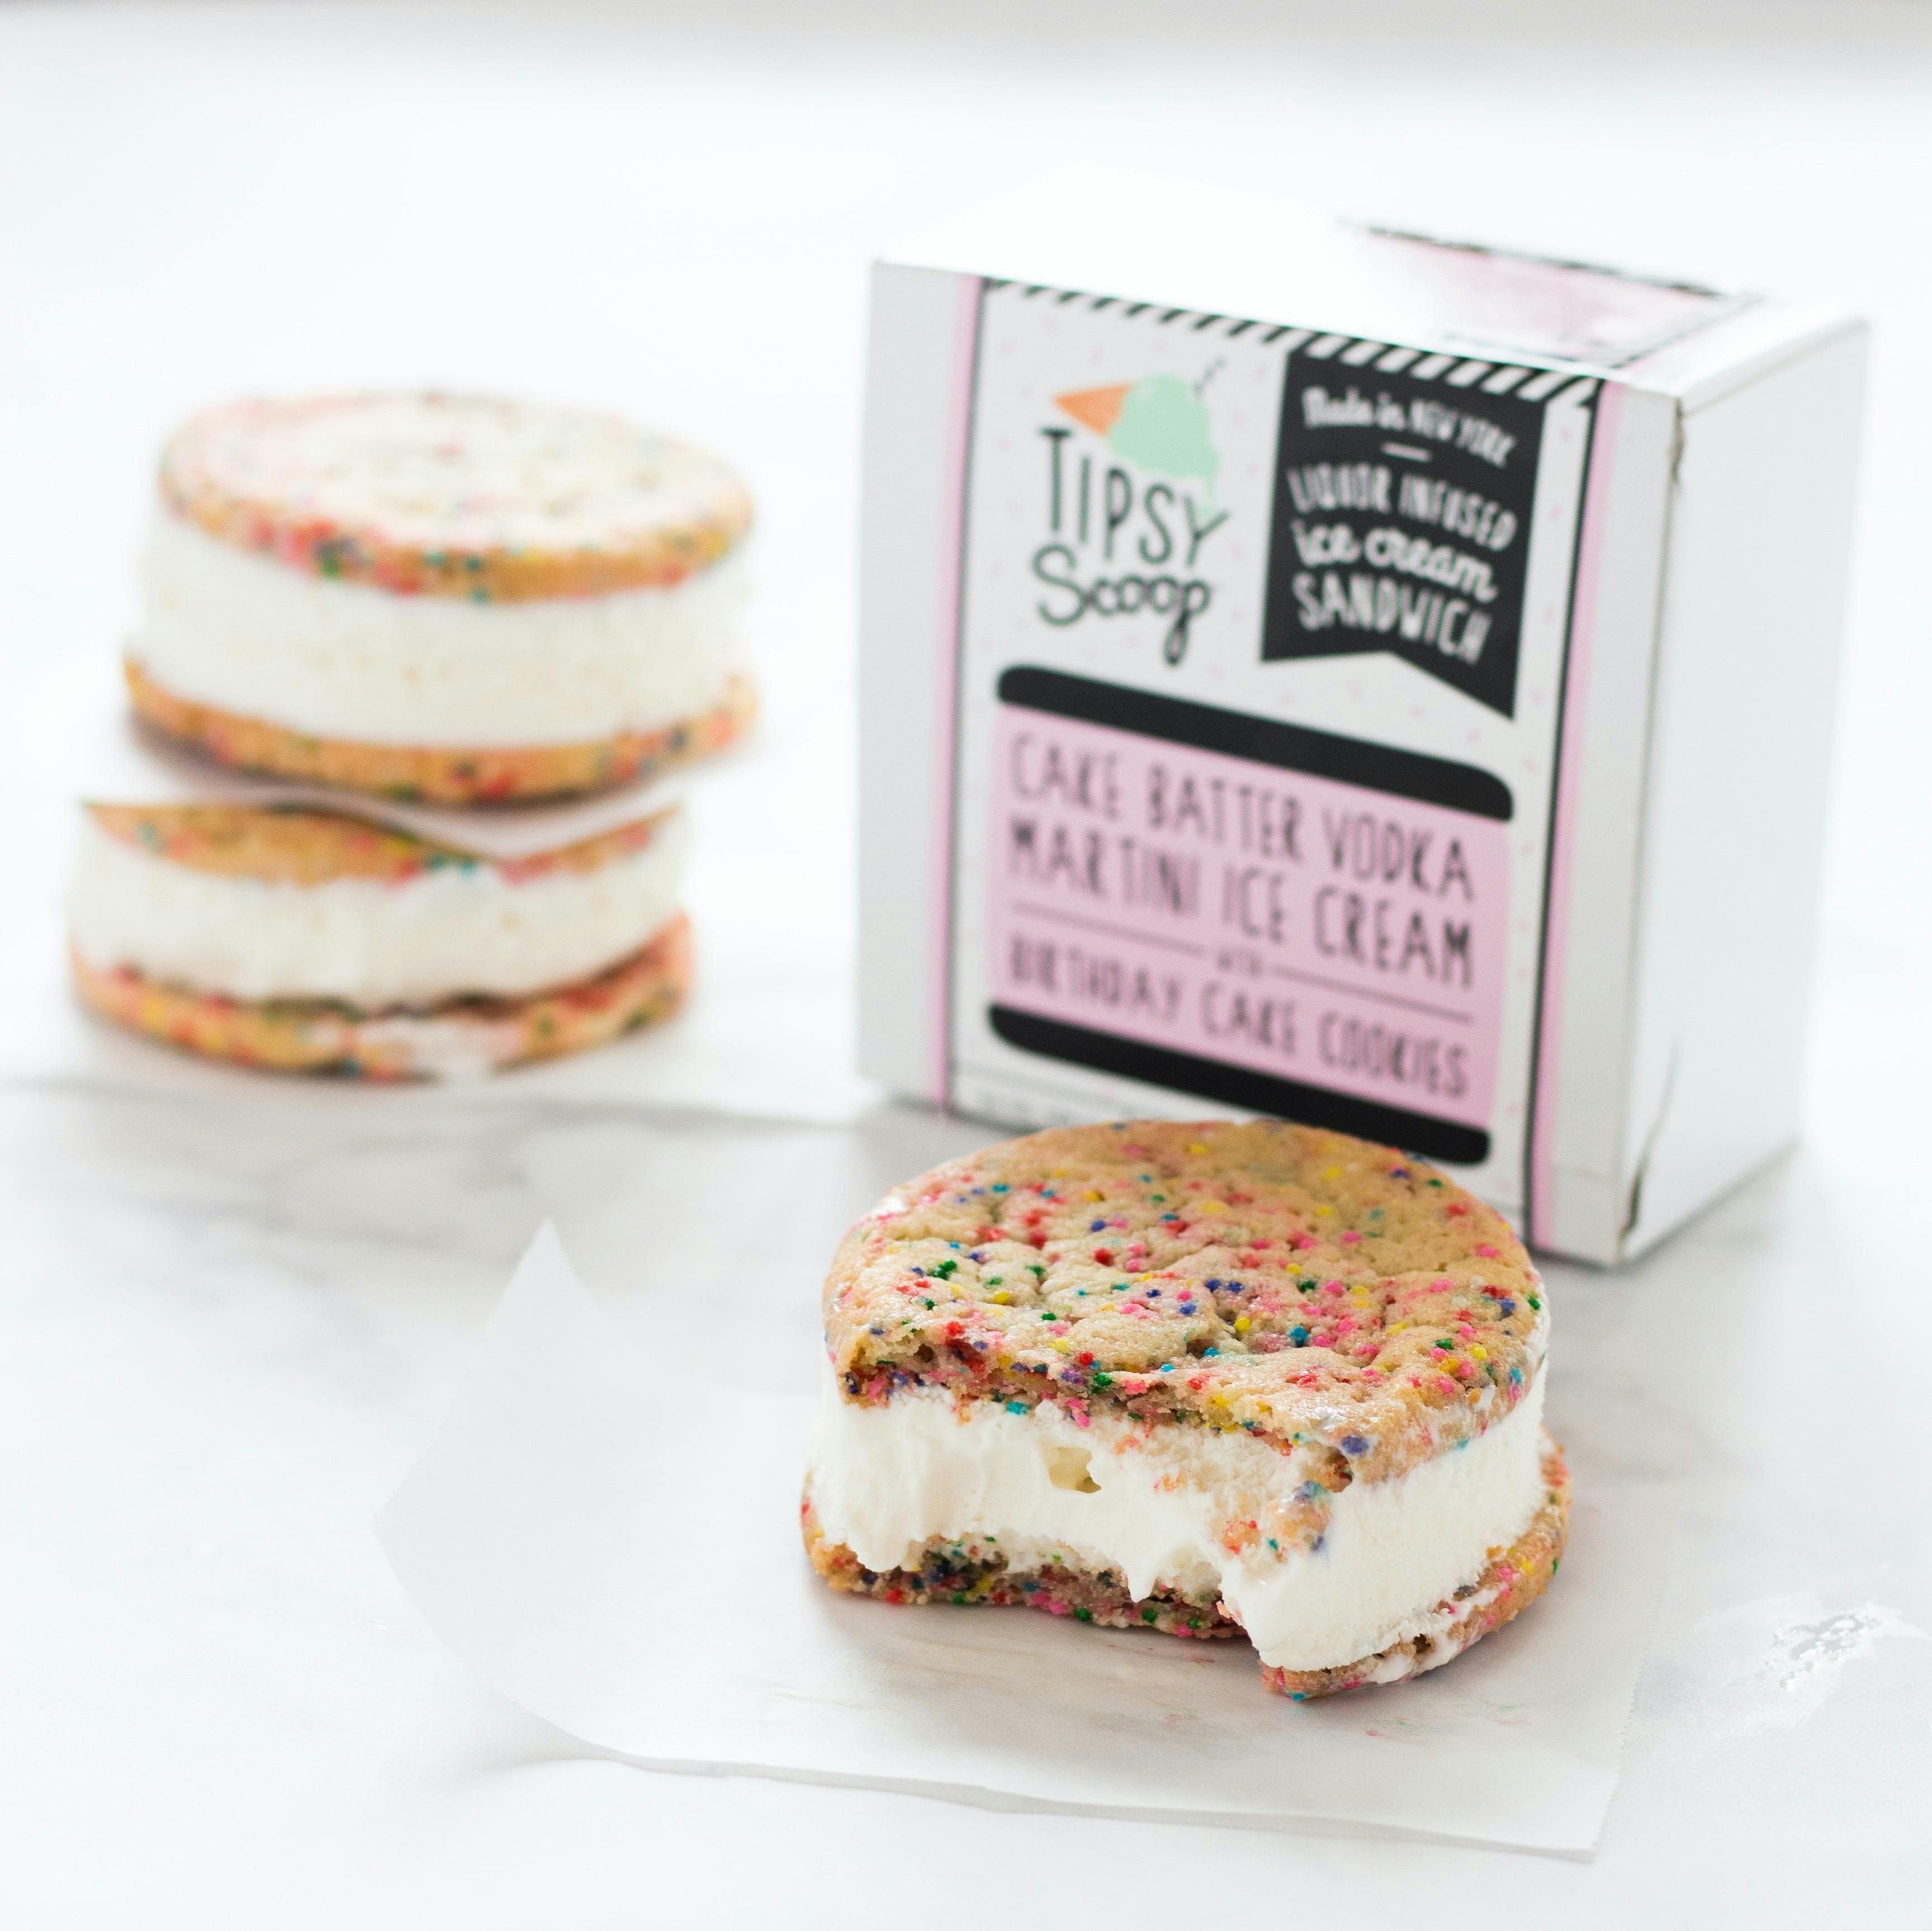 DIY Boozy Ice Cream Sandwich Making Kit - 12 Pack by Tipsy Scoop Boozy Ice  Cream | Goldbelly